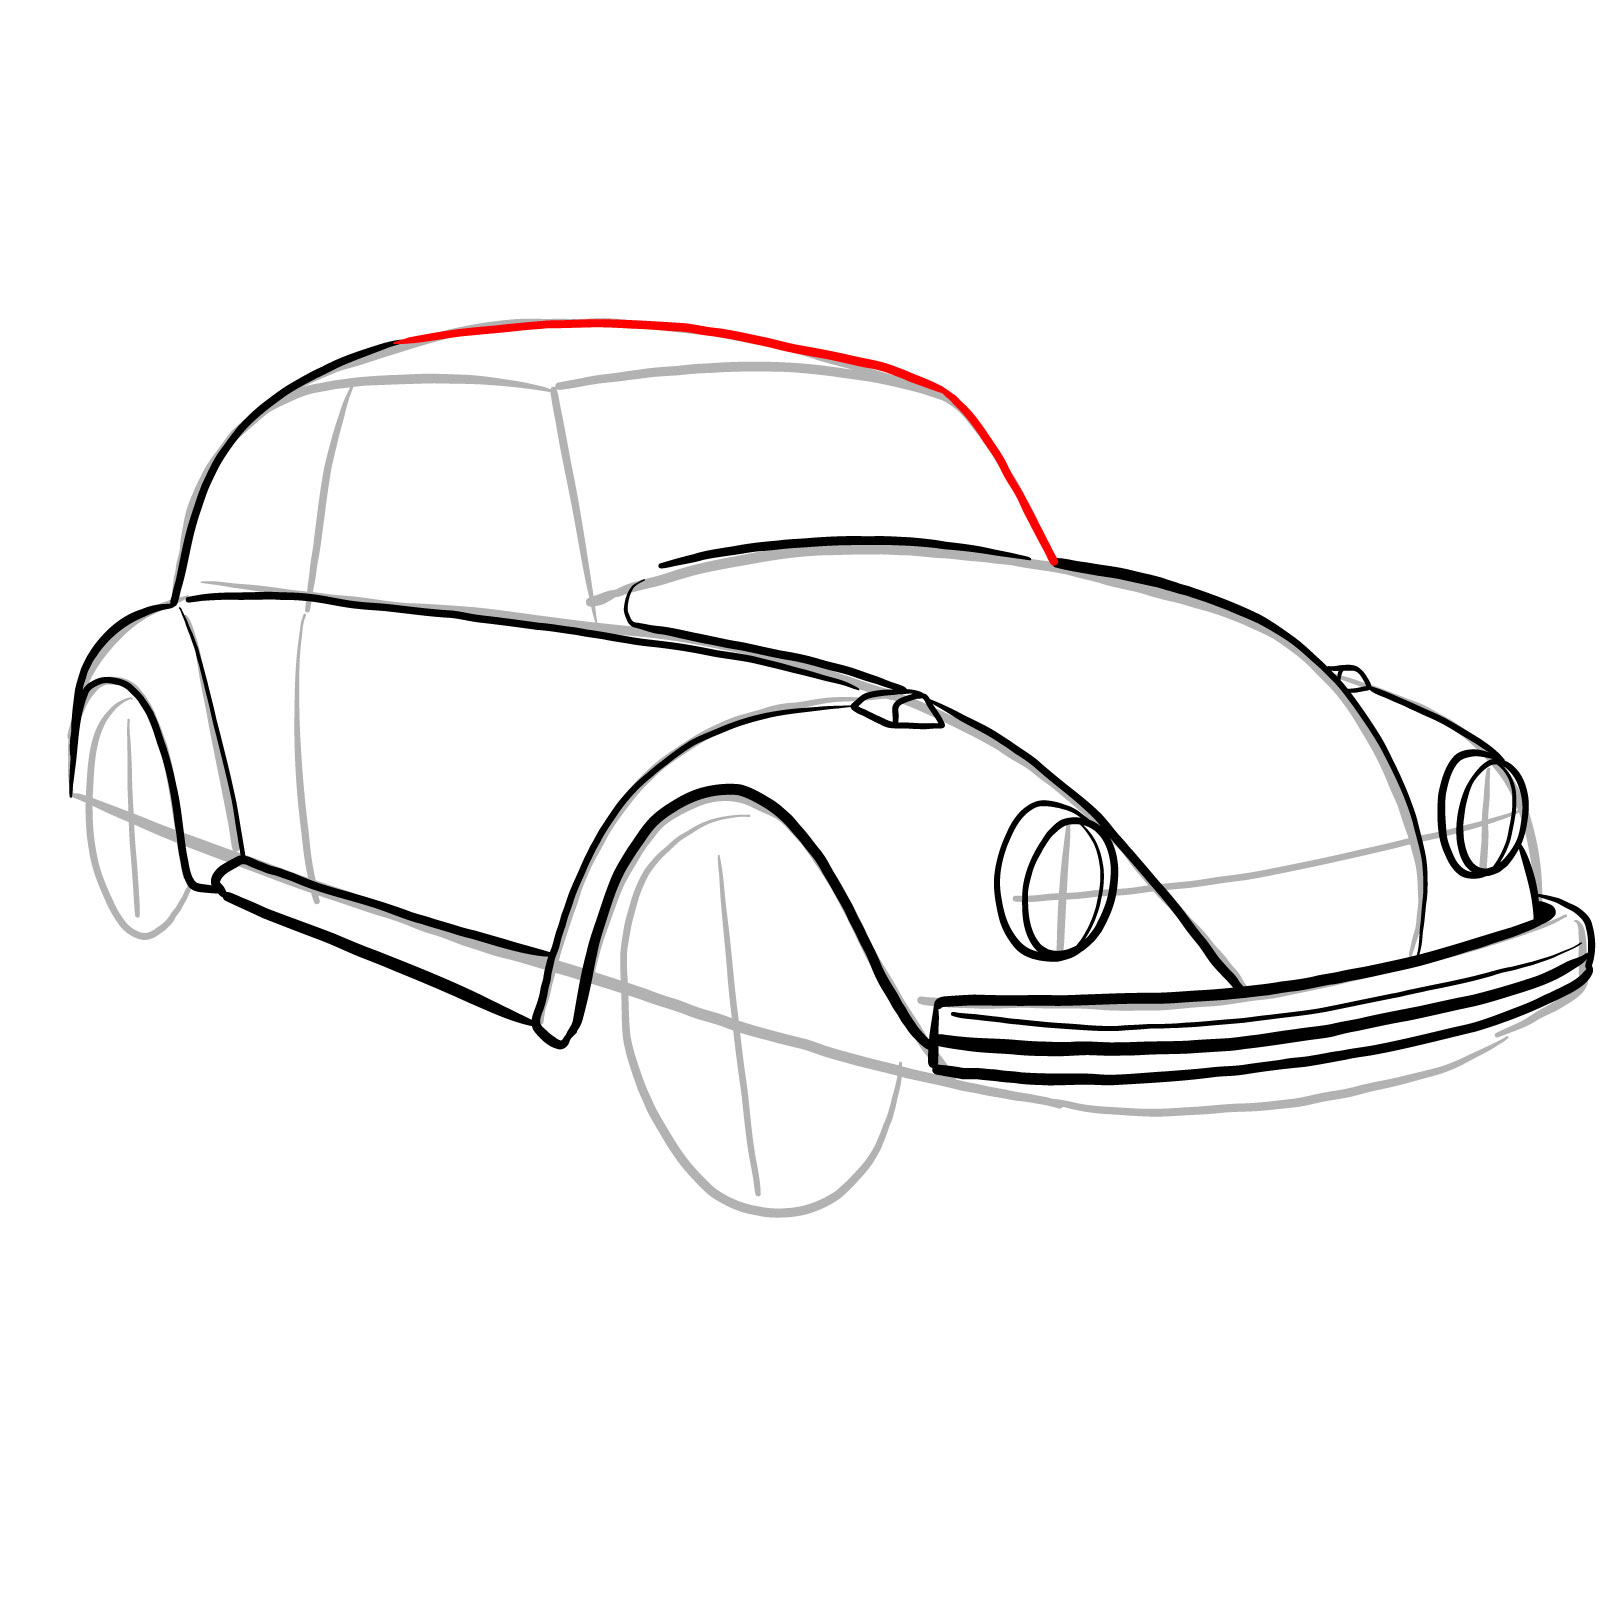 How to draw Volkswagen Beetle 1972 - step 19